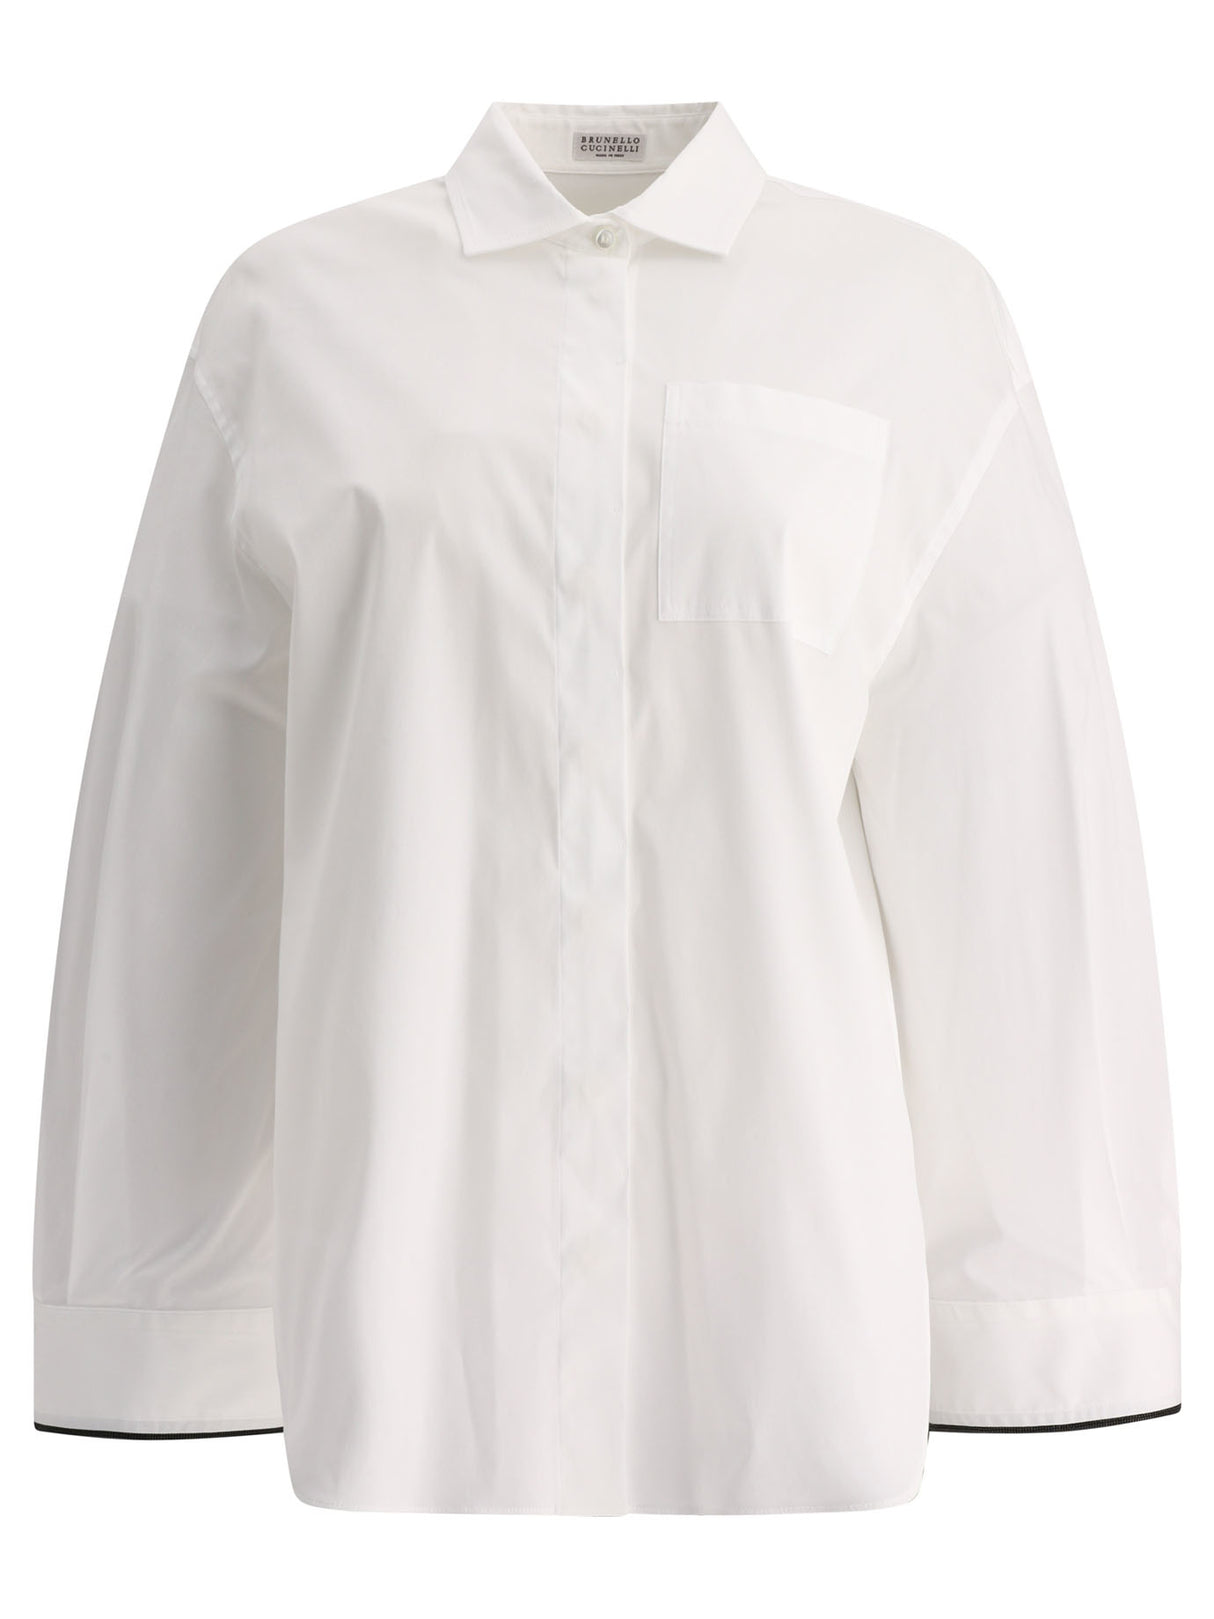 BRUNELLO CUCINELLI Poplin Shirt with Shiny Cuff Details for Women - White